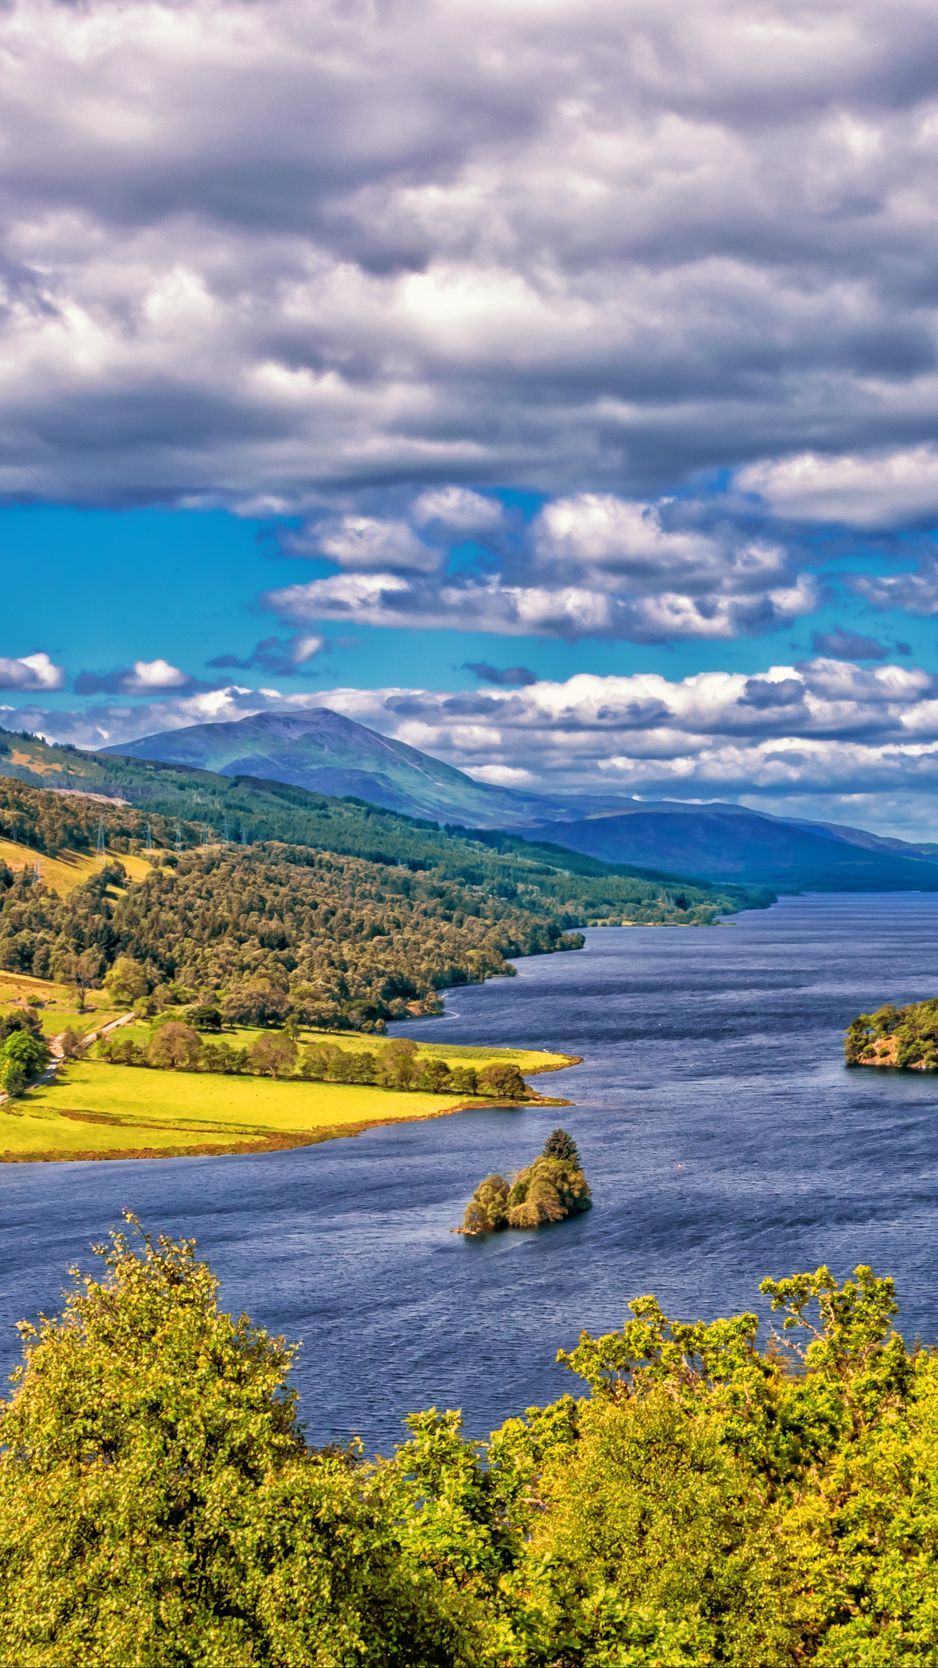 Download wallpaper 938x1668 scotland, highlands, lake, hdr iphone